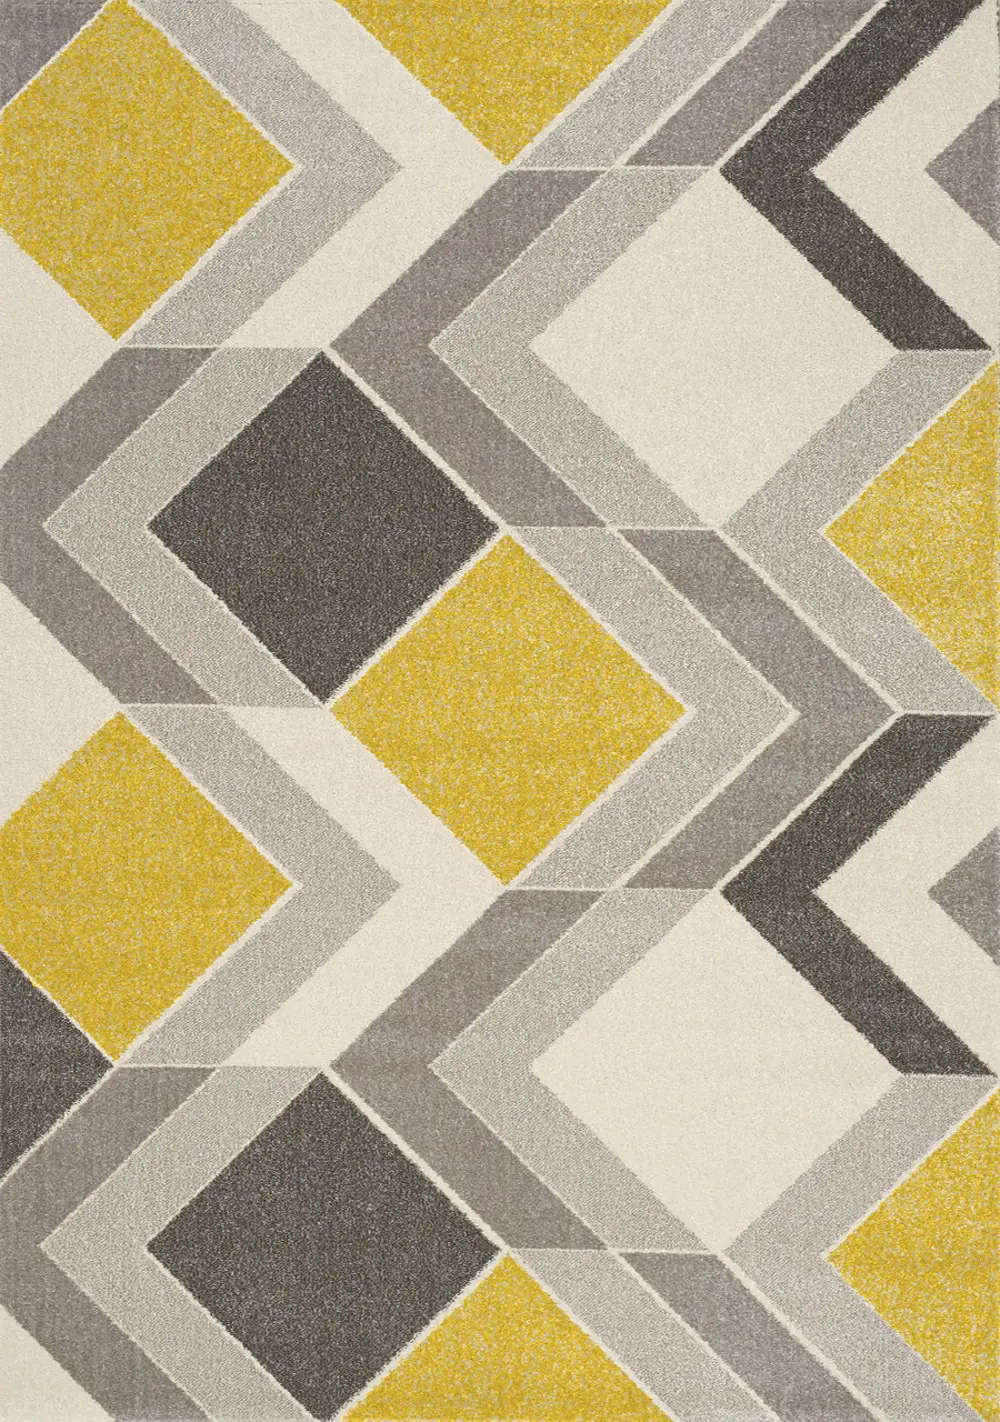 5 x 8 Medium Geometric Gray, Cream and Yellow Area Rug - Safi-1